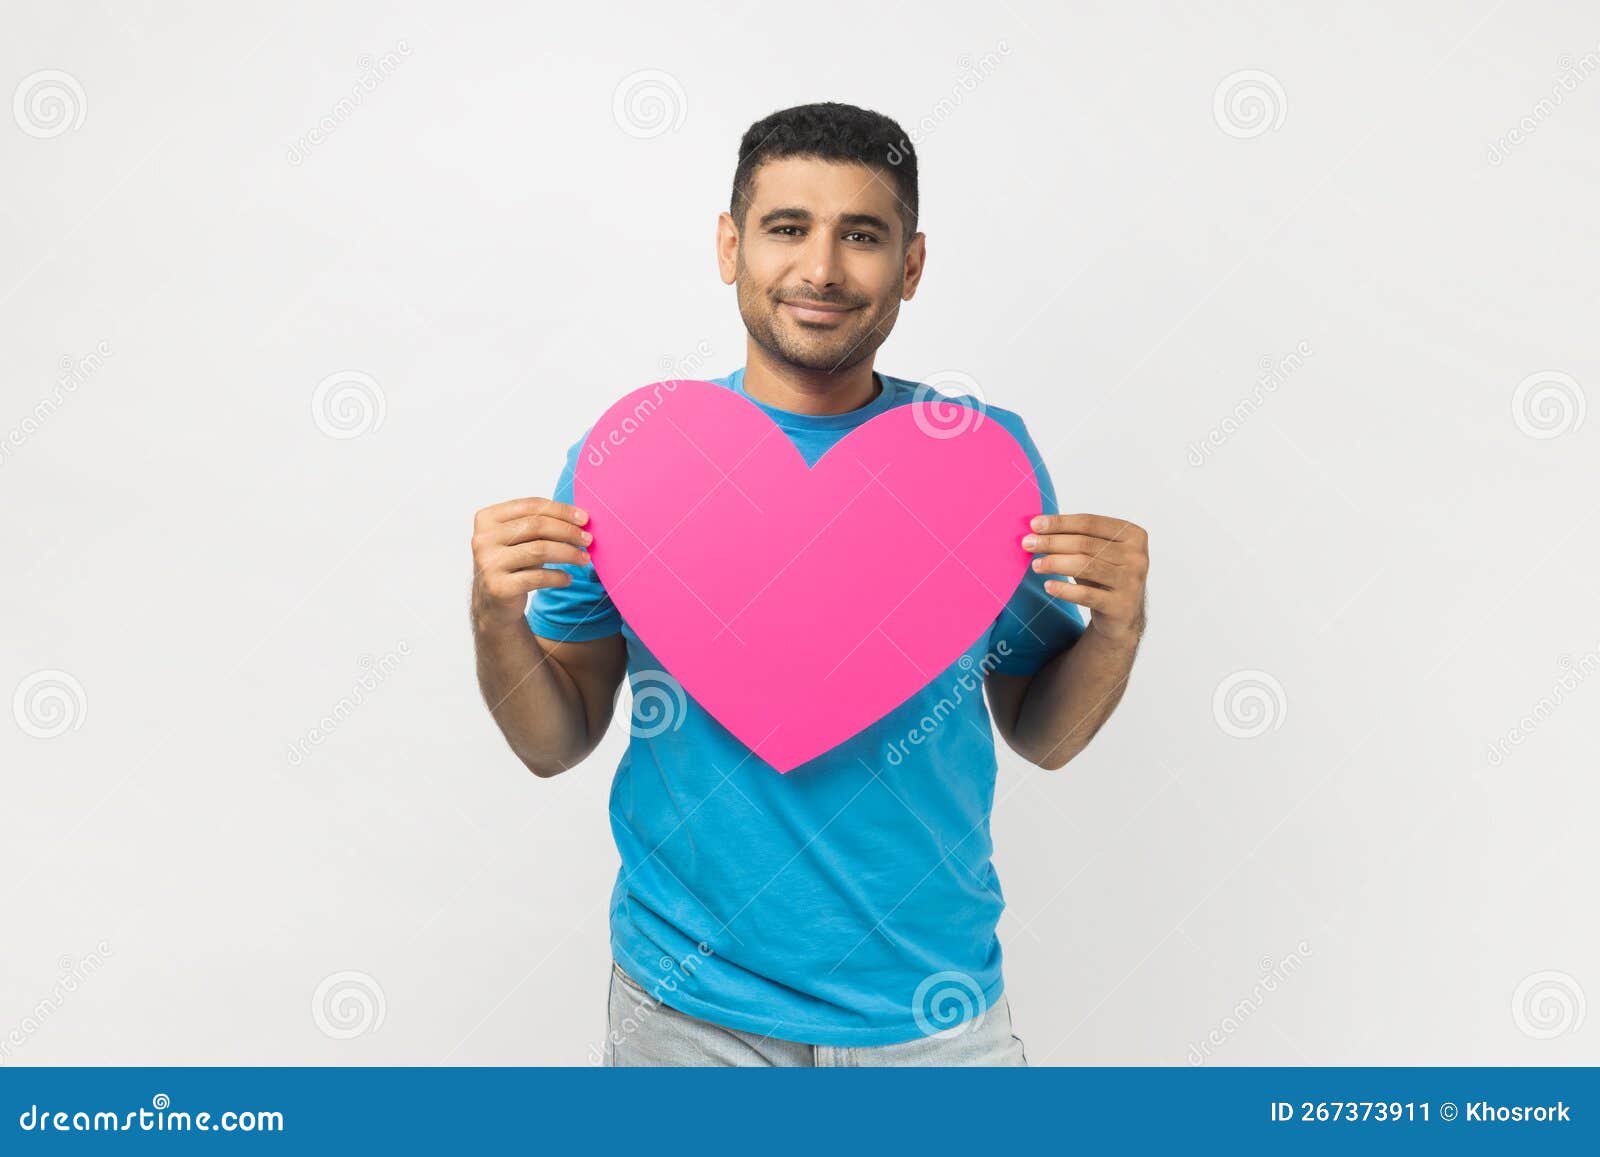 romantic smiling joyful man standing holding big pink heart, expressing fondness and love.